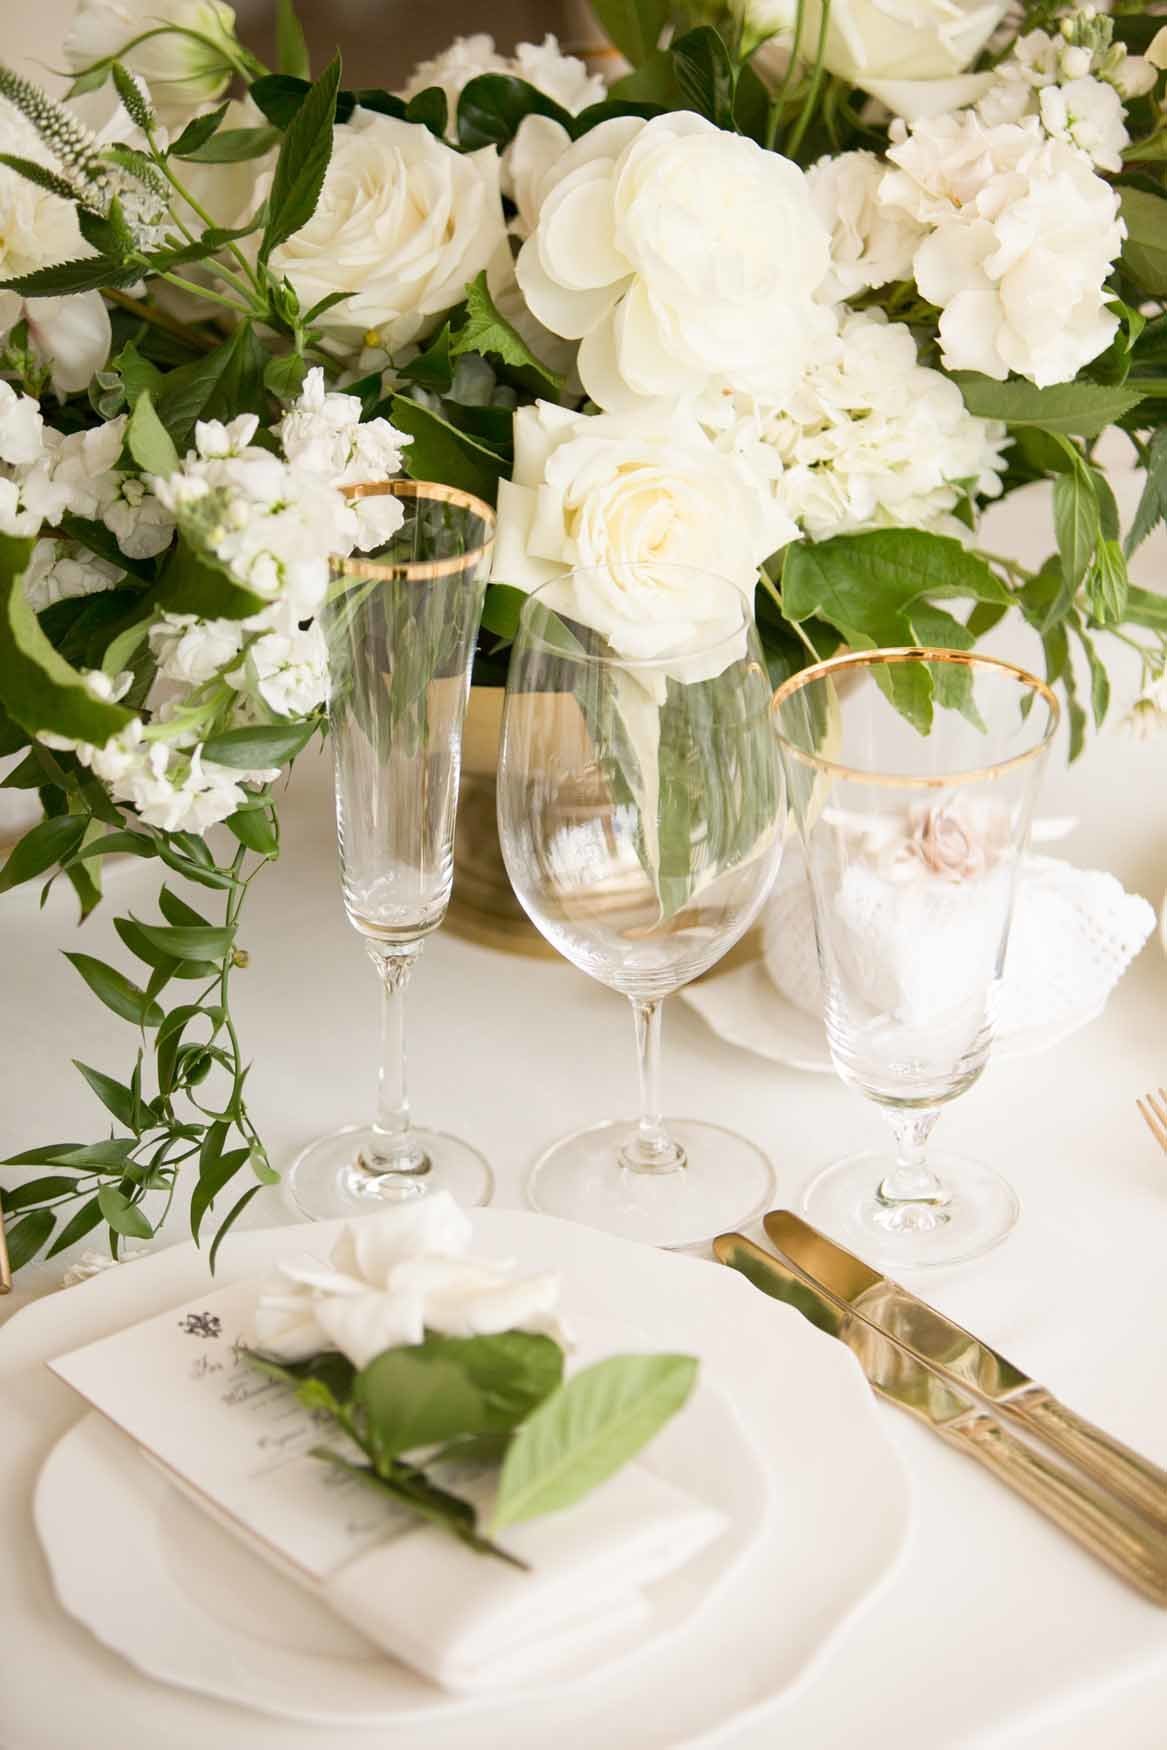 Luxurious white and gold table setting with gardenia napkin flower